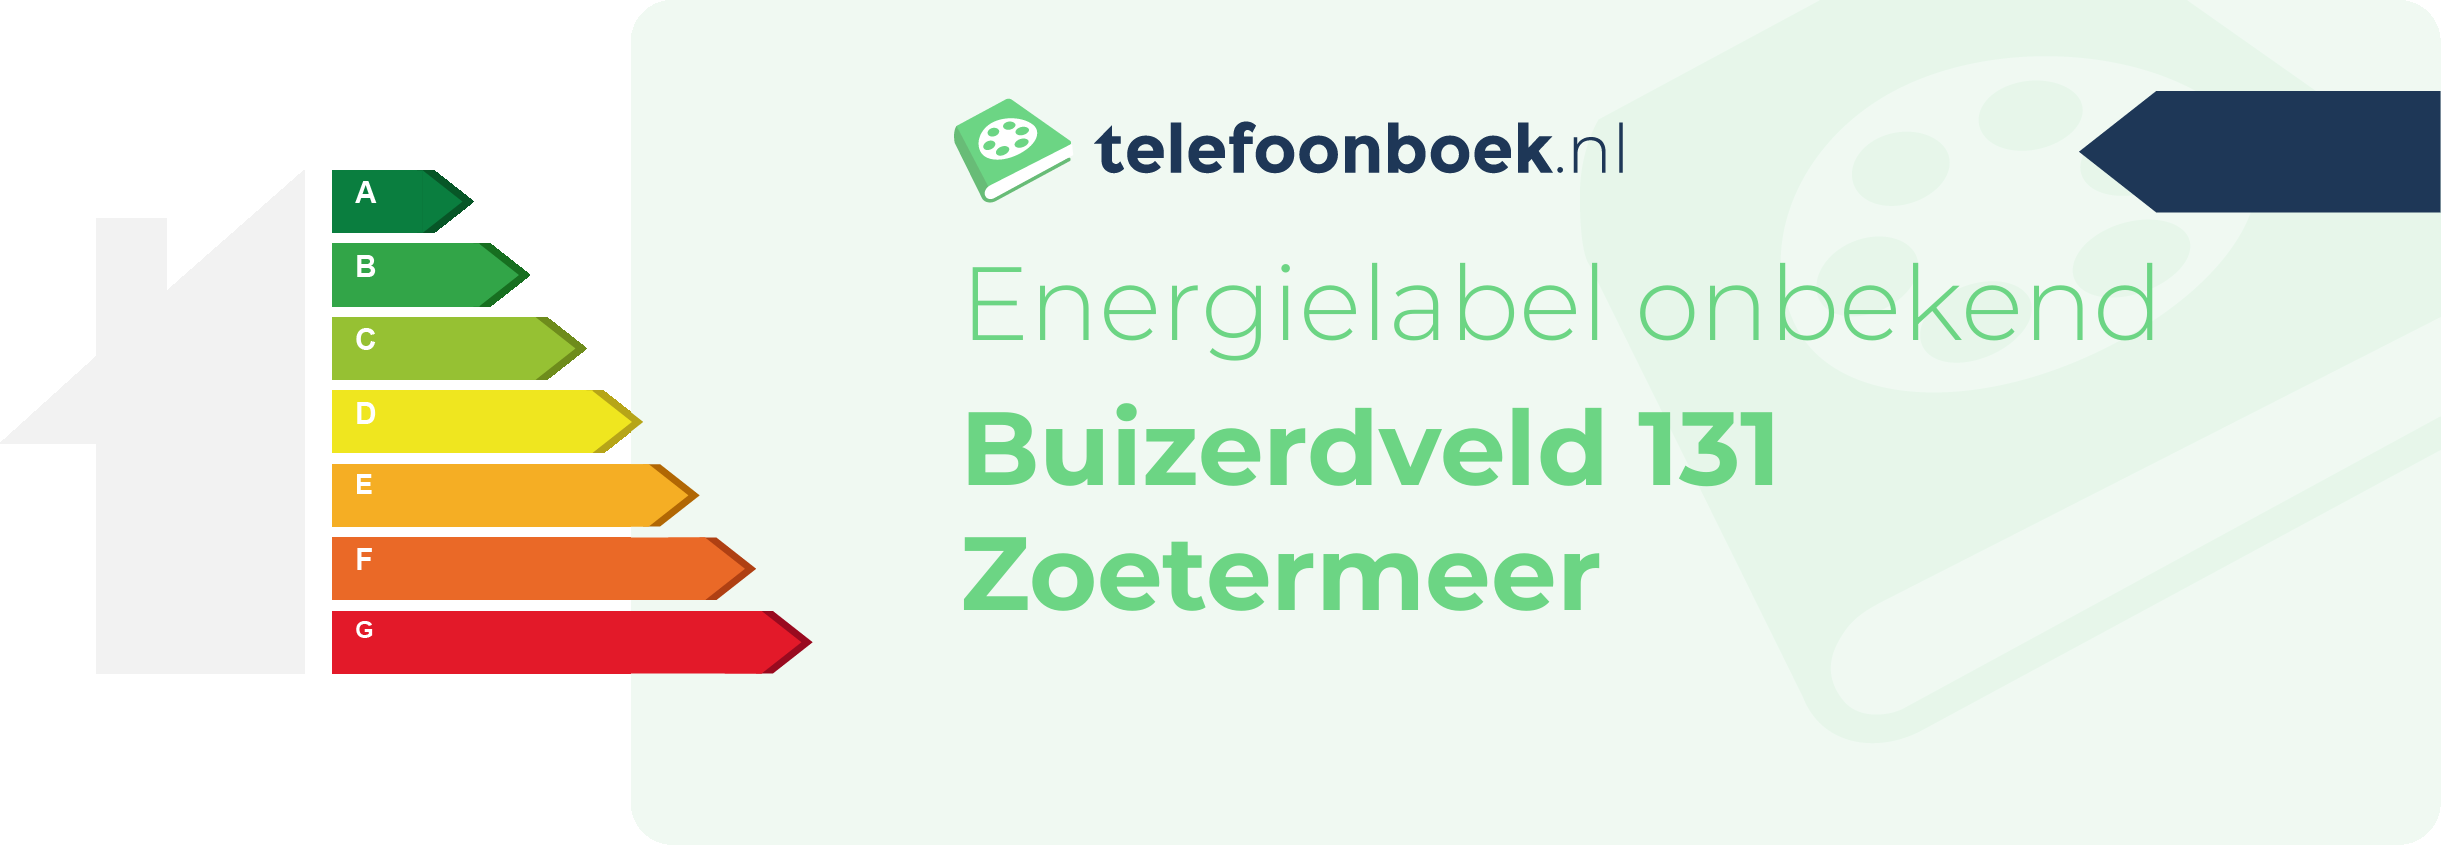 Energielabel Buizerdveld 131 Zoetermeer